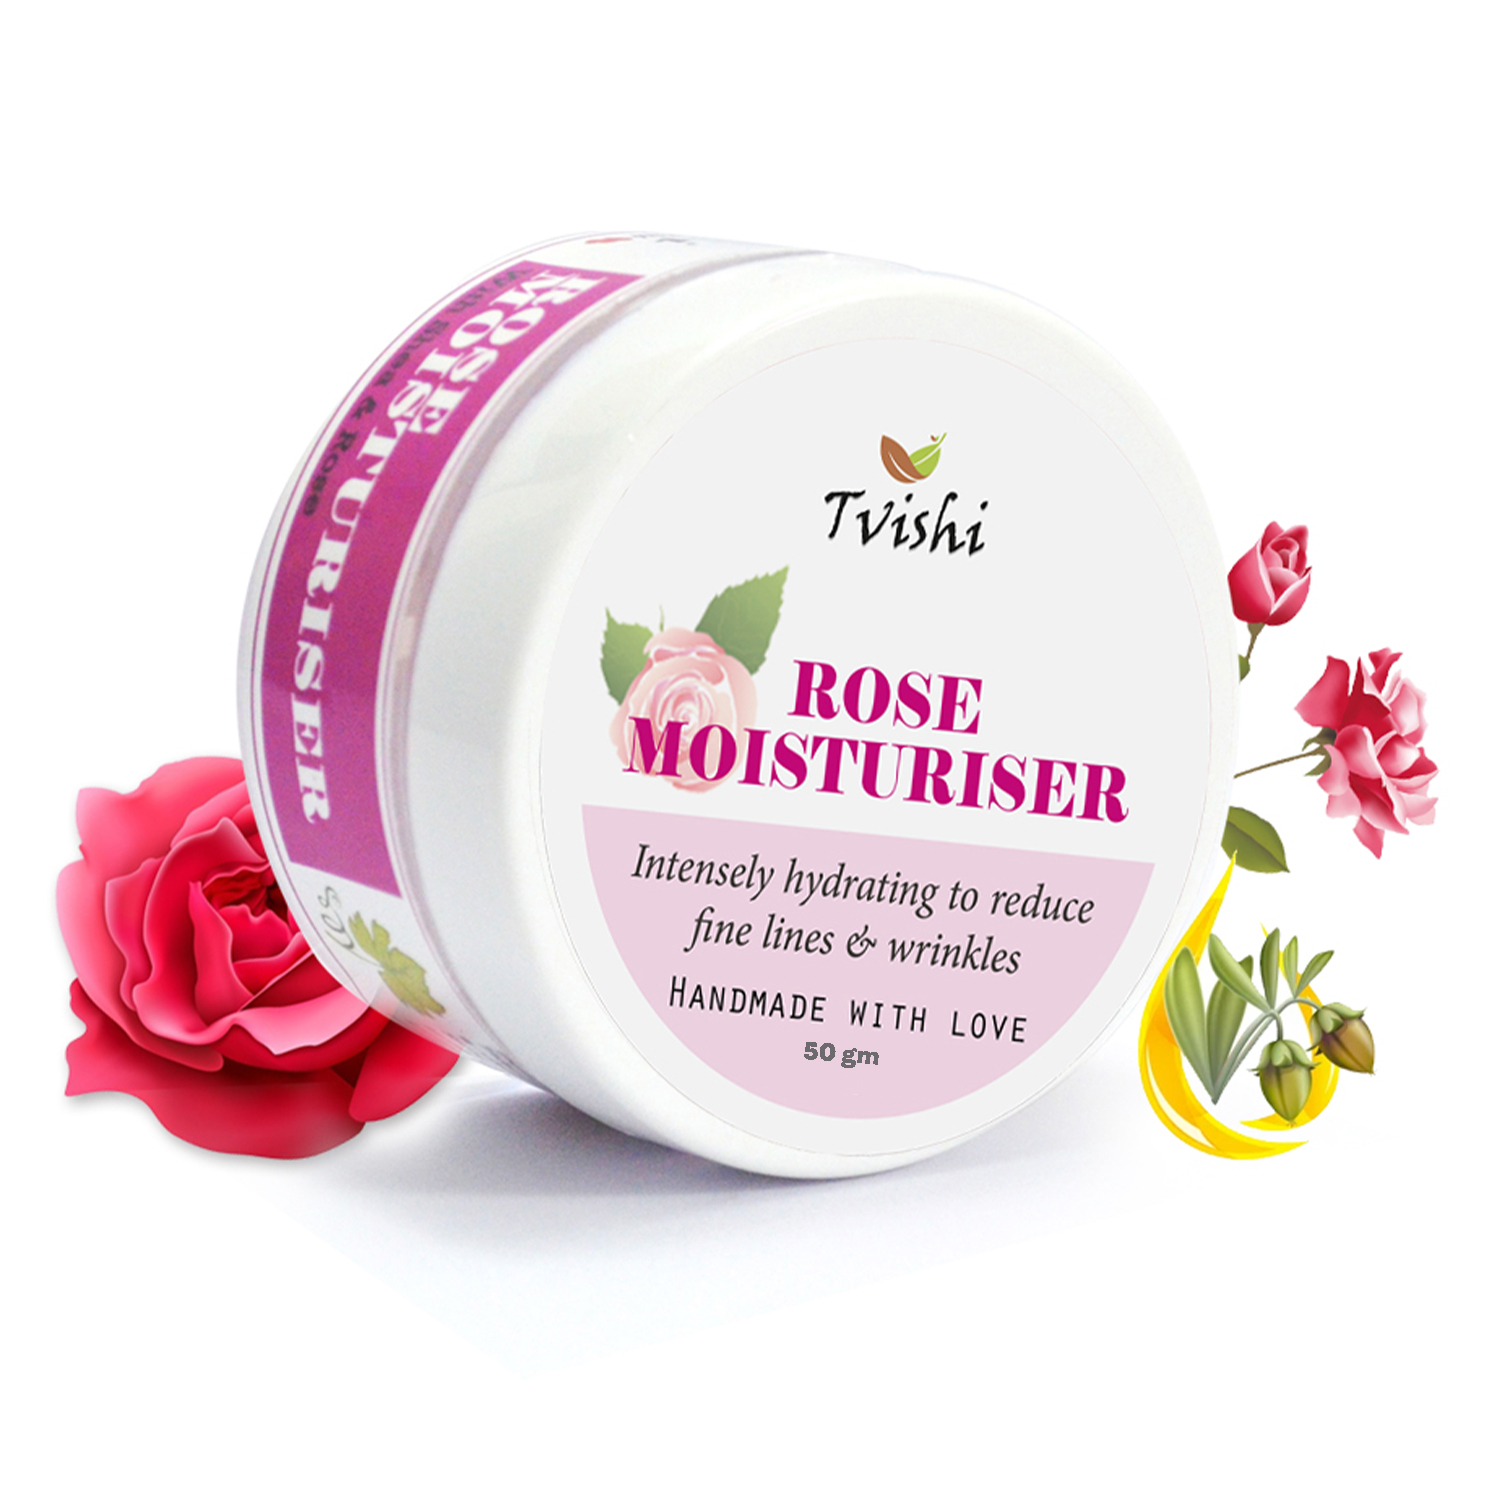 Tvishi Handmade Rose Moisturiser-50gm